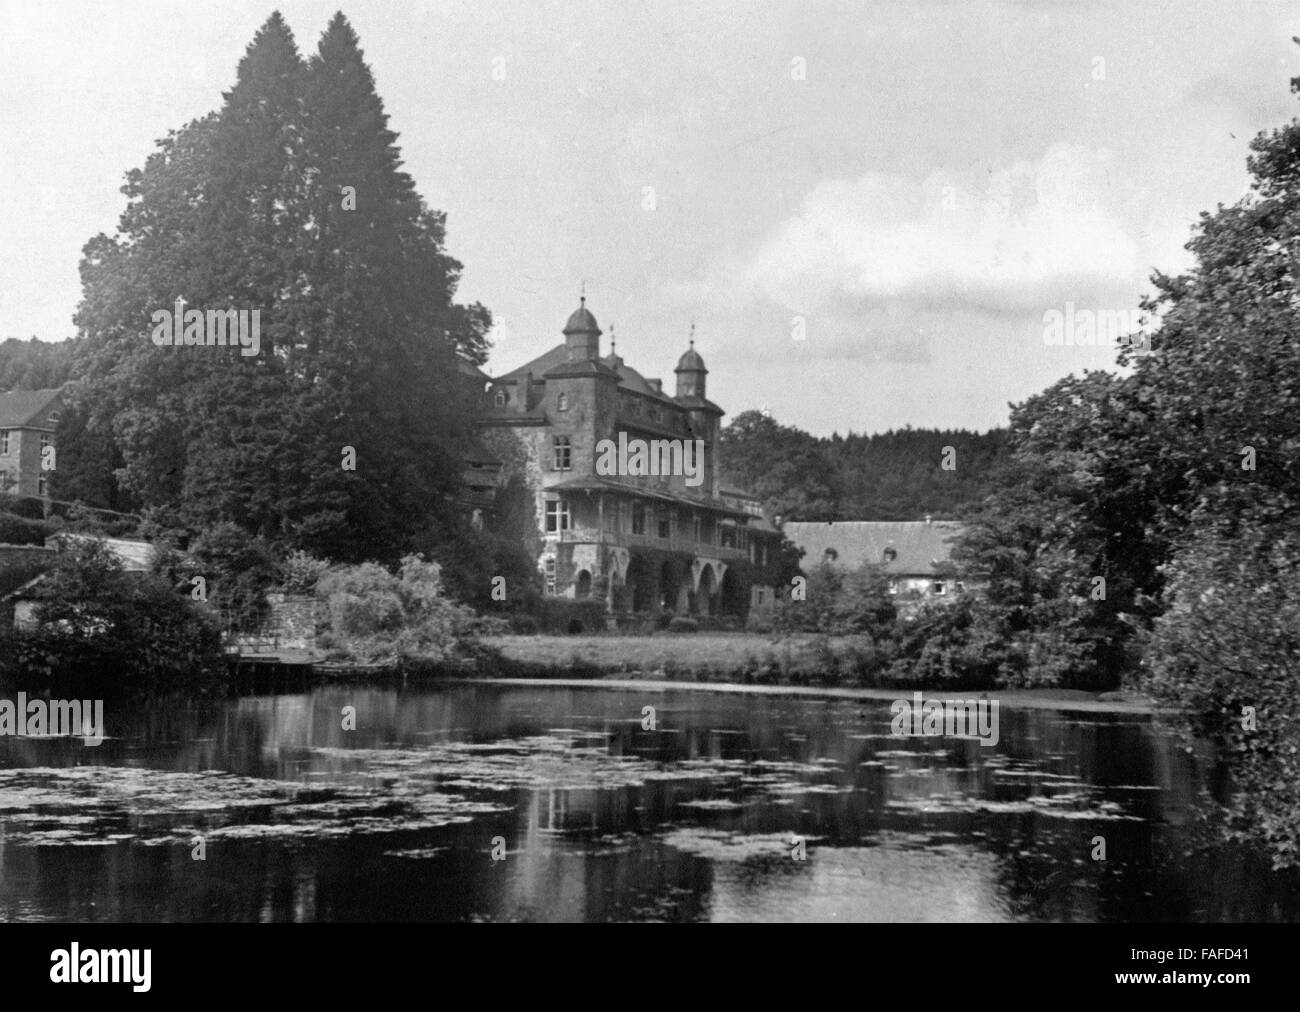 Gimborn Schloß bei Marienheide im Bergischen Land, Deutschland 1930 er Jahre. Schloss Gimborn château près de Marienheide, dans la région de Bergisches Land, Allemagne 1930. Banque D'Images